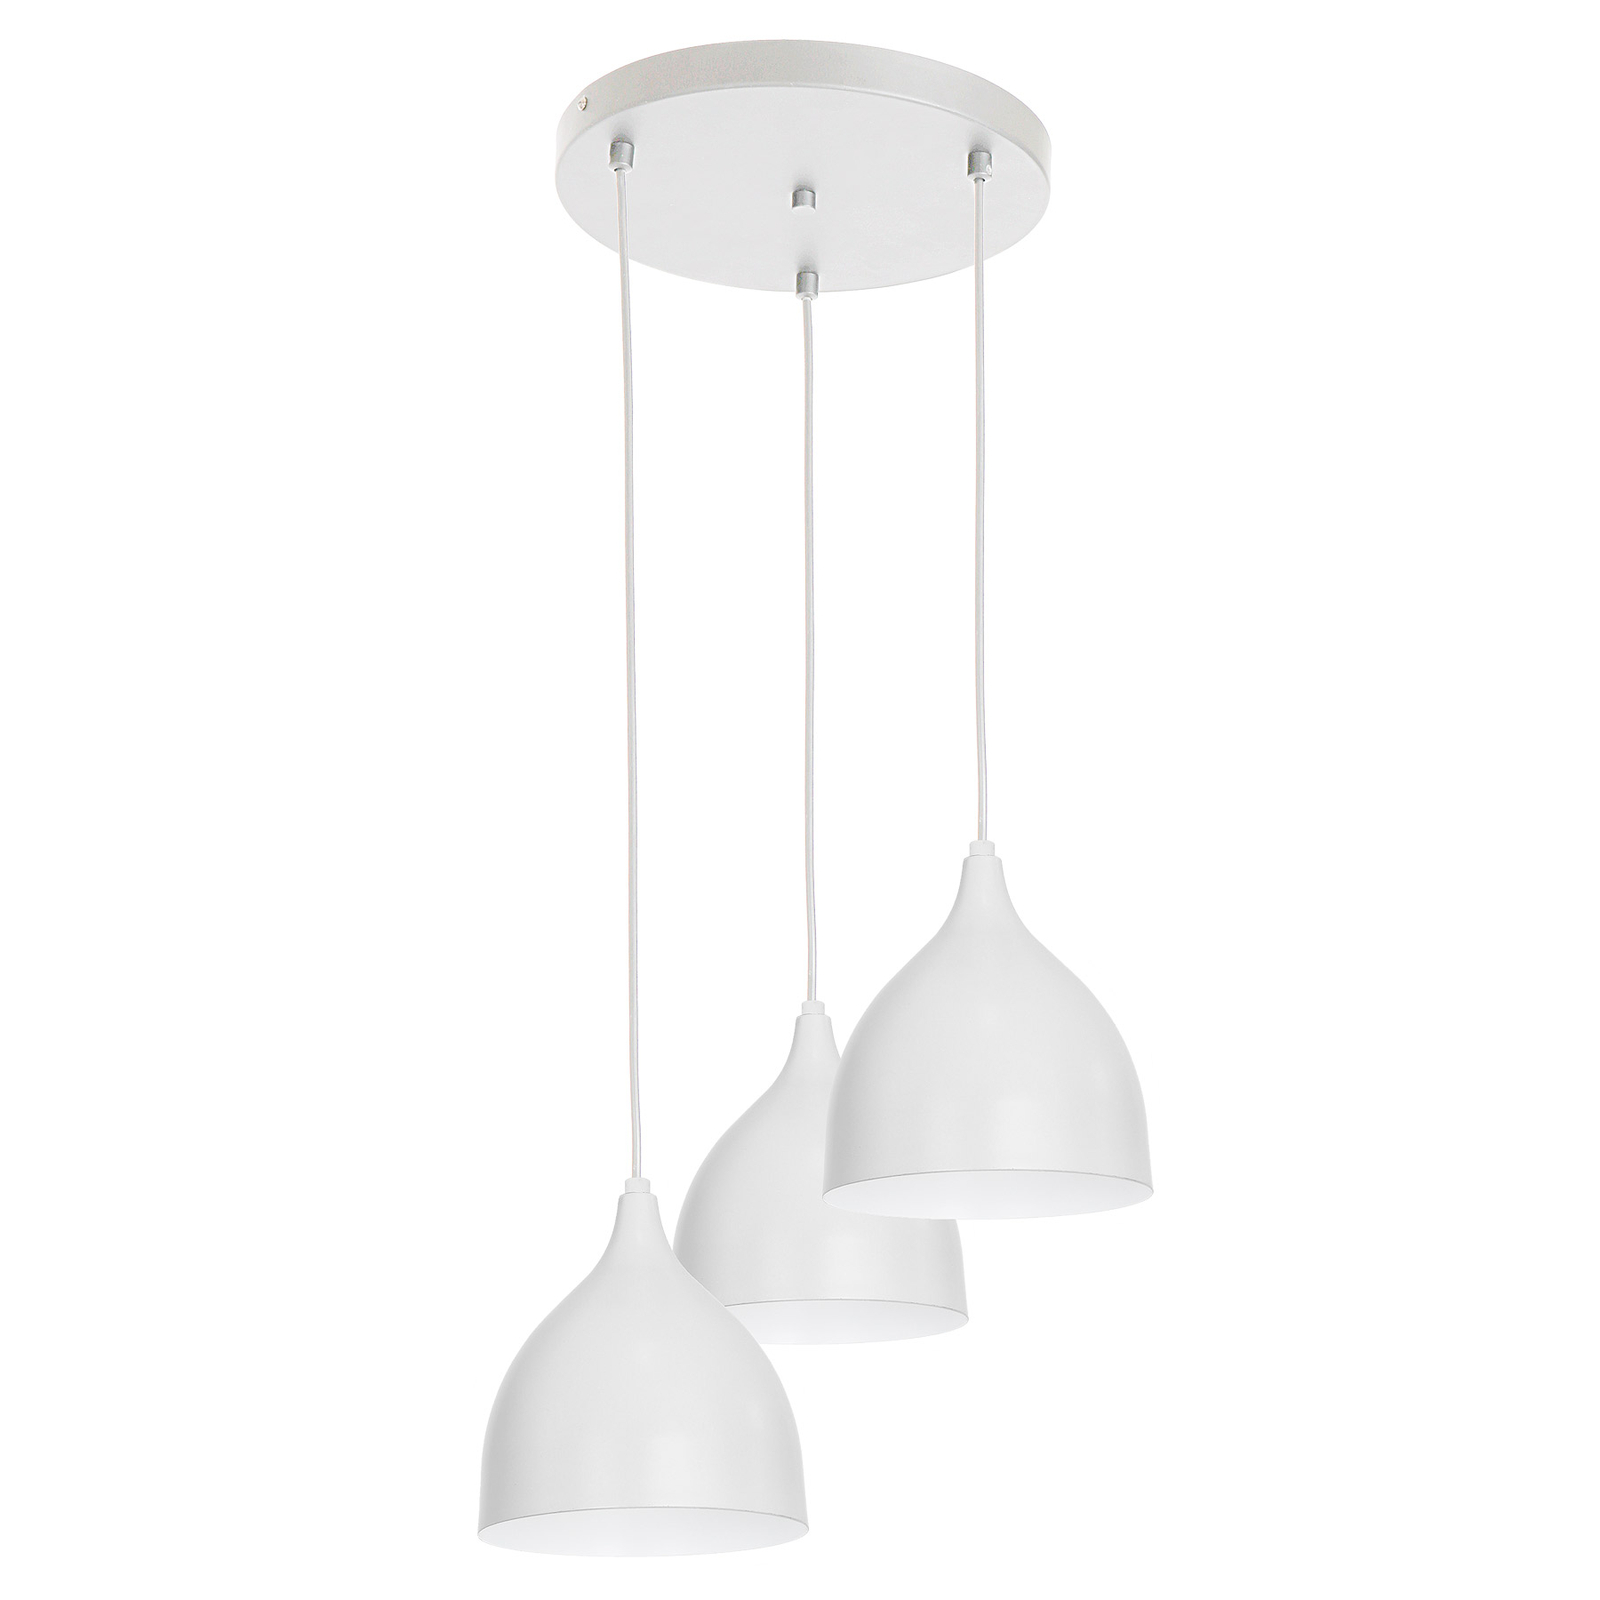 Nanu hanging light three-bulb round light grey